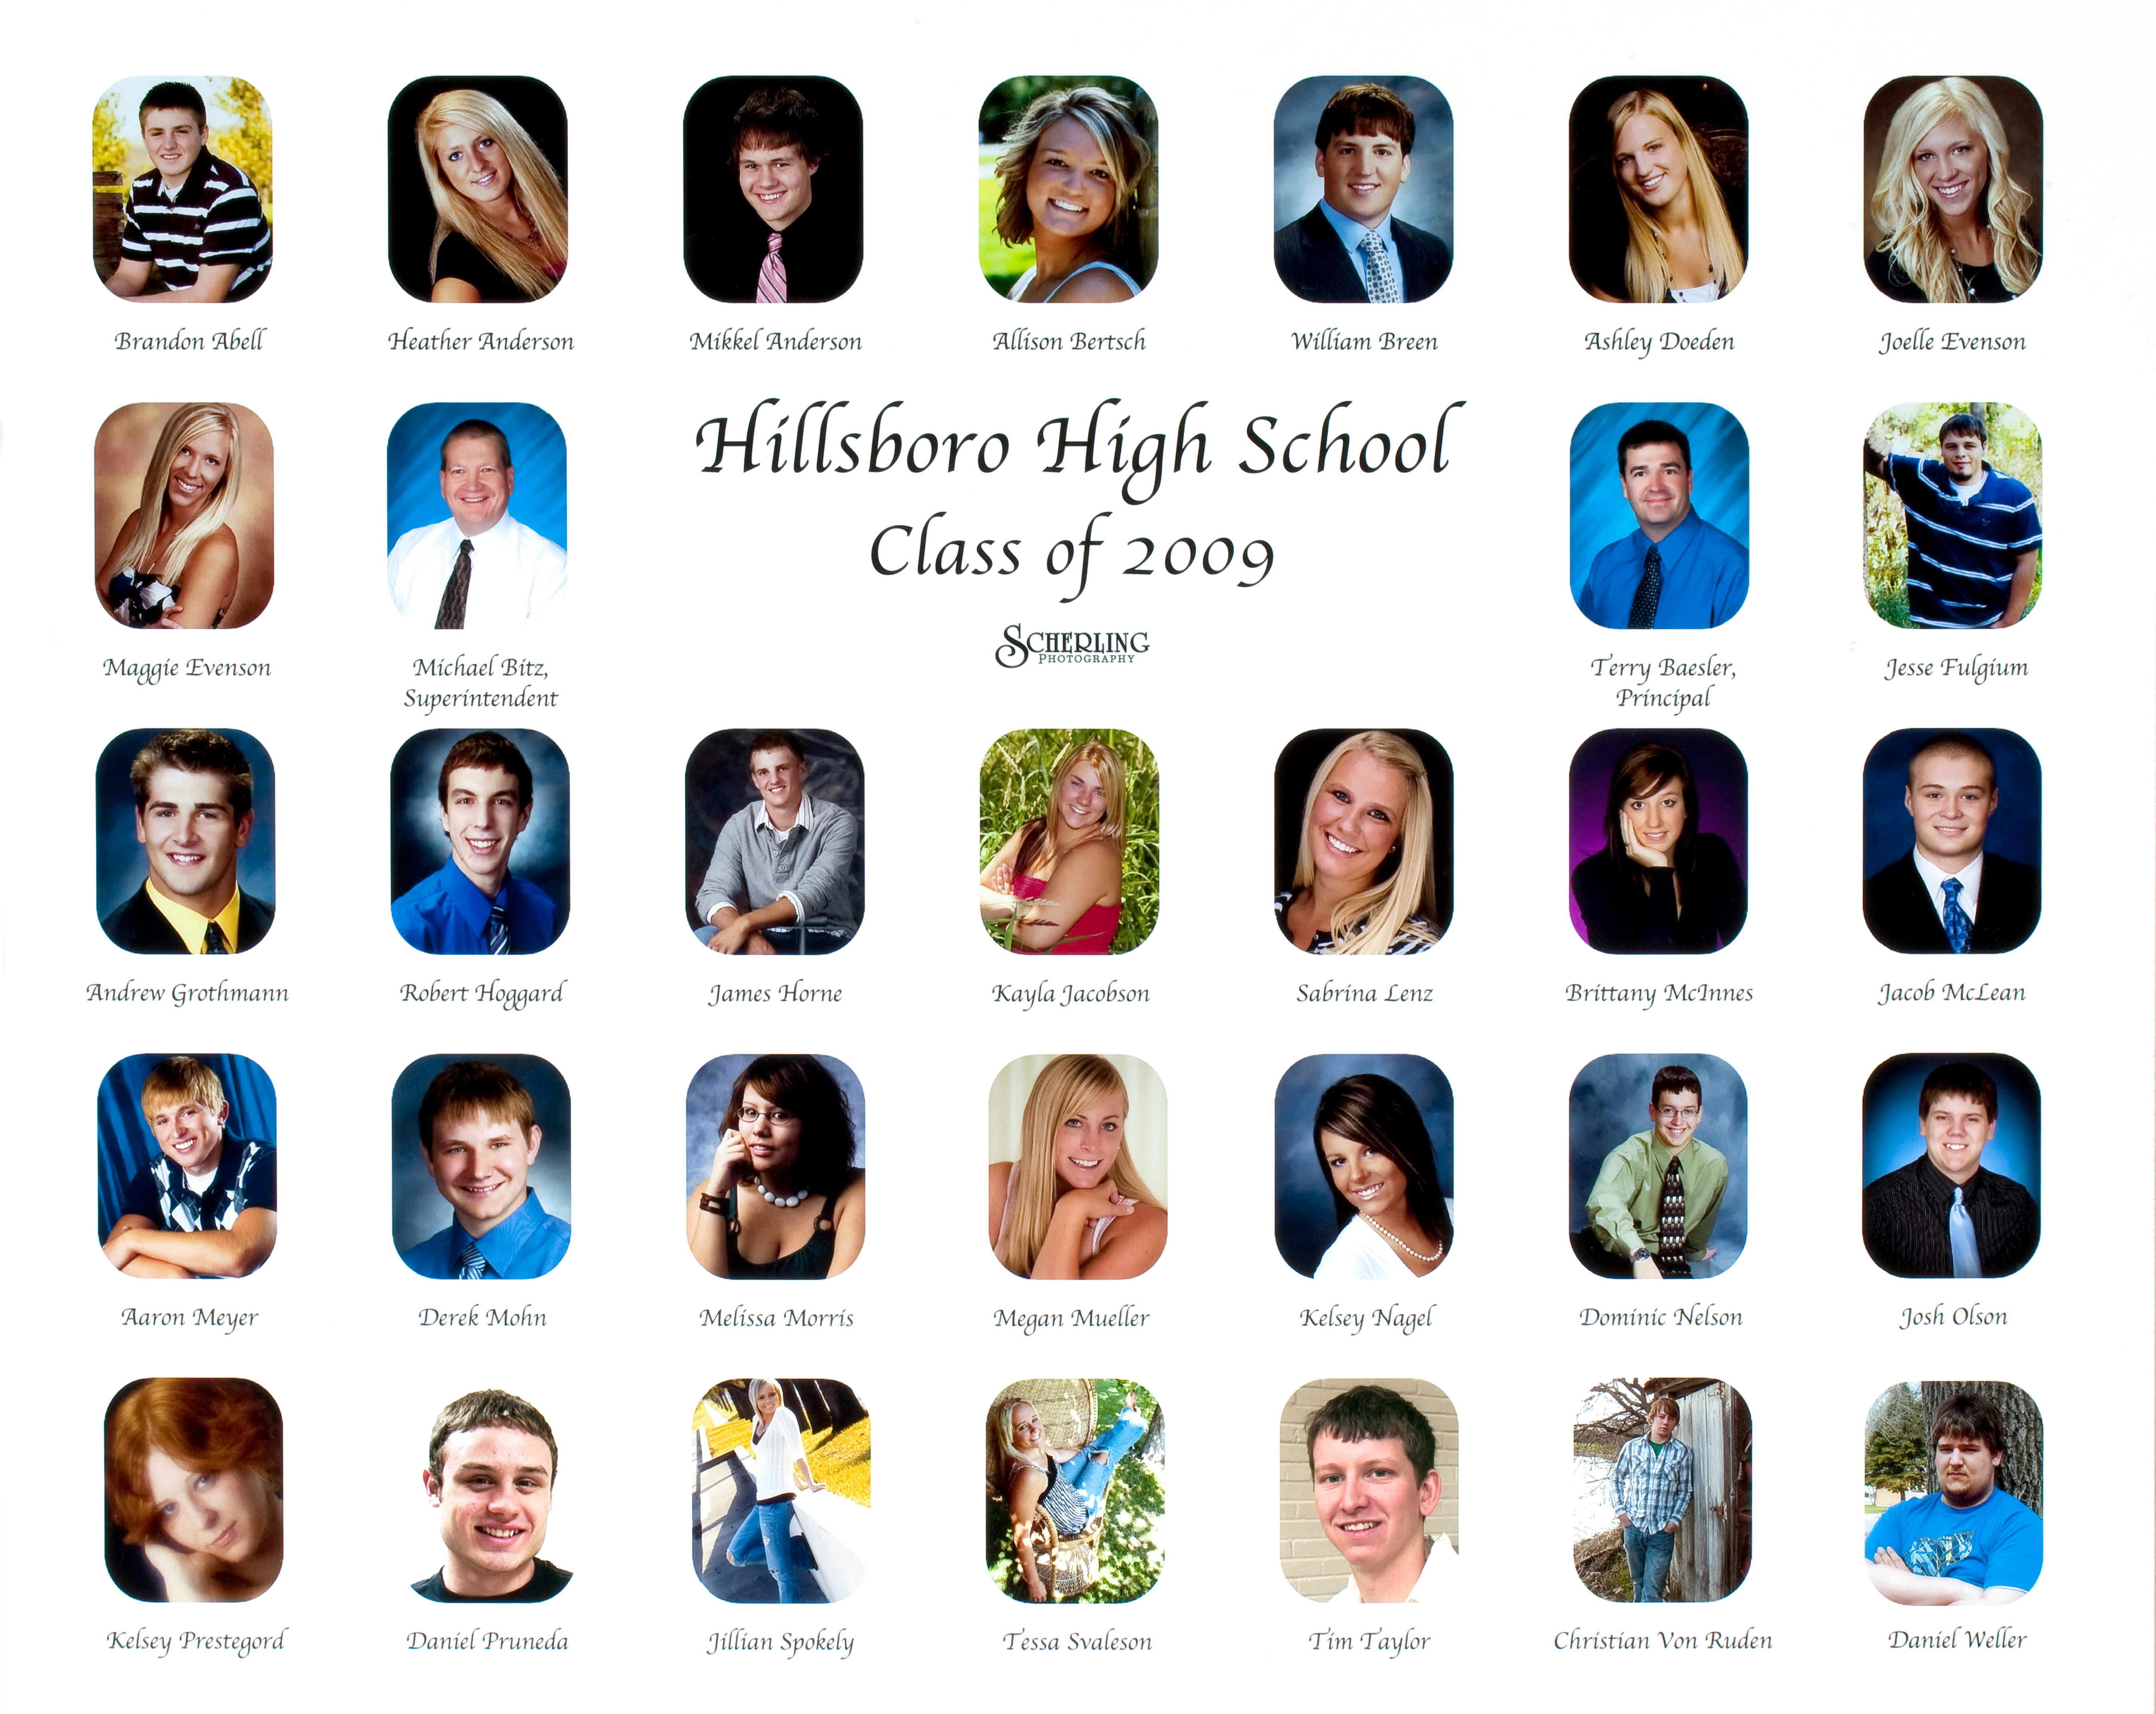 Class of 2009